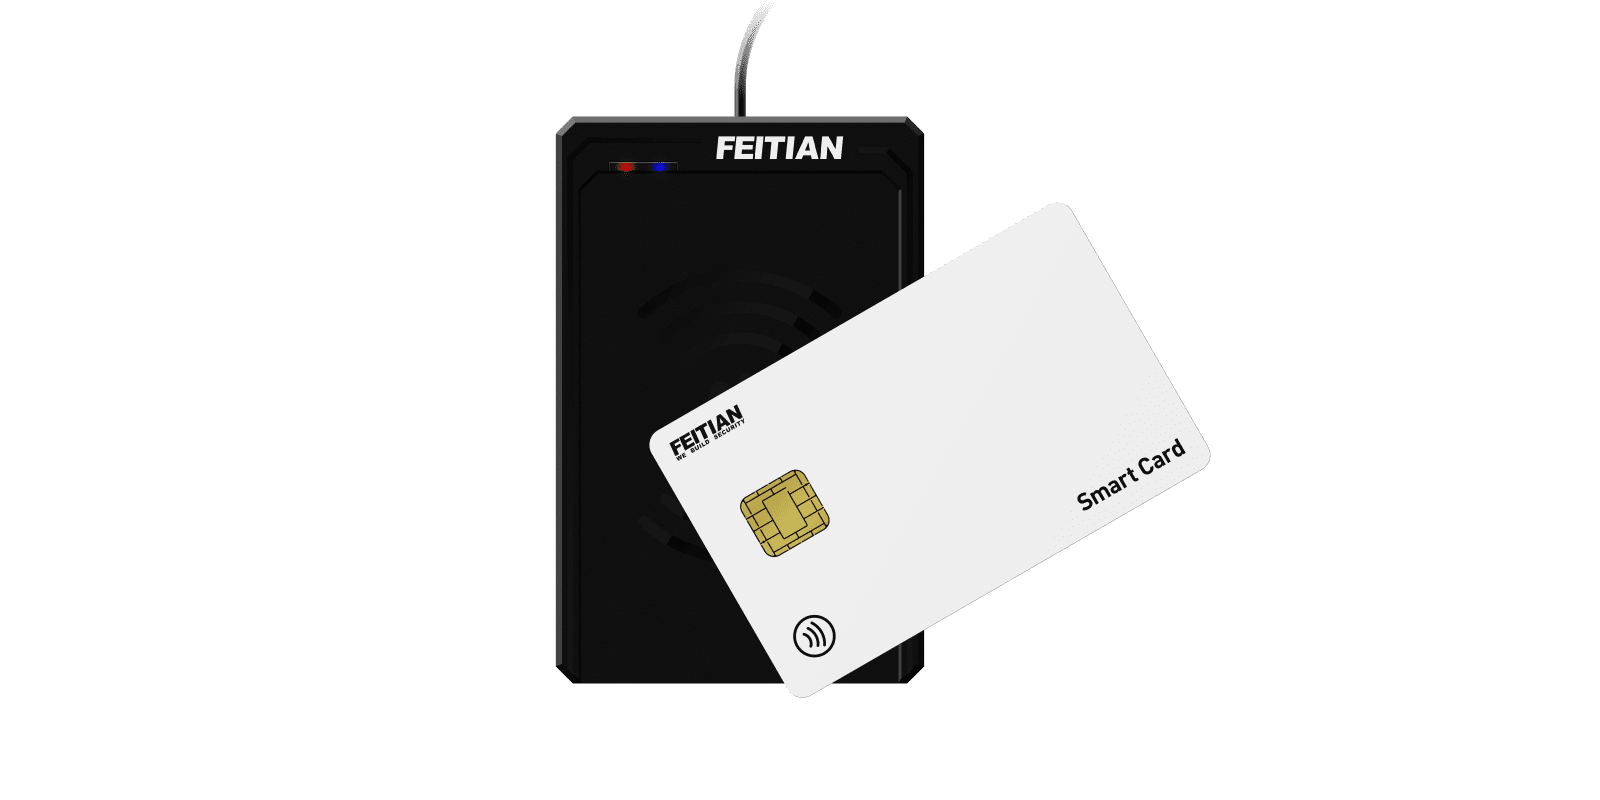 FEITIAN R502-CL Smart Card Reader: Lightning fast